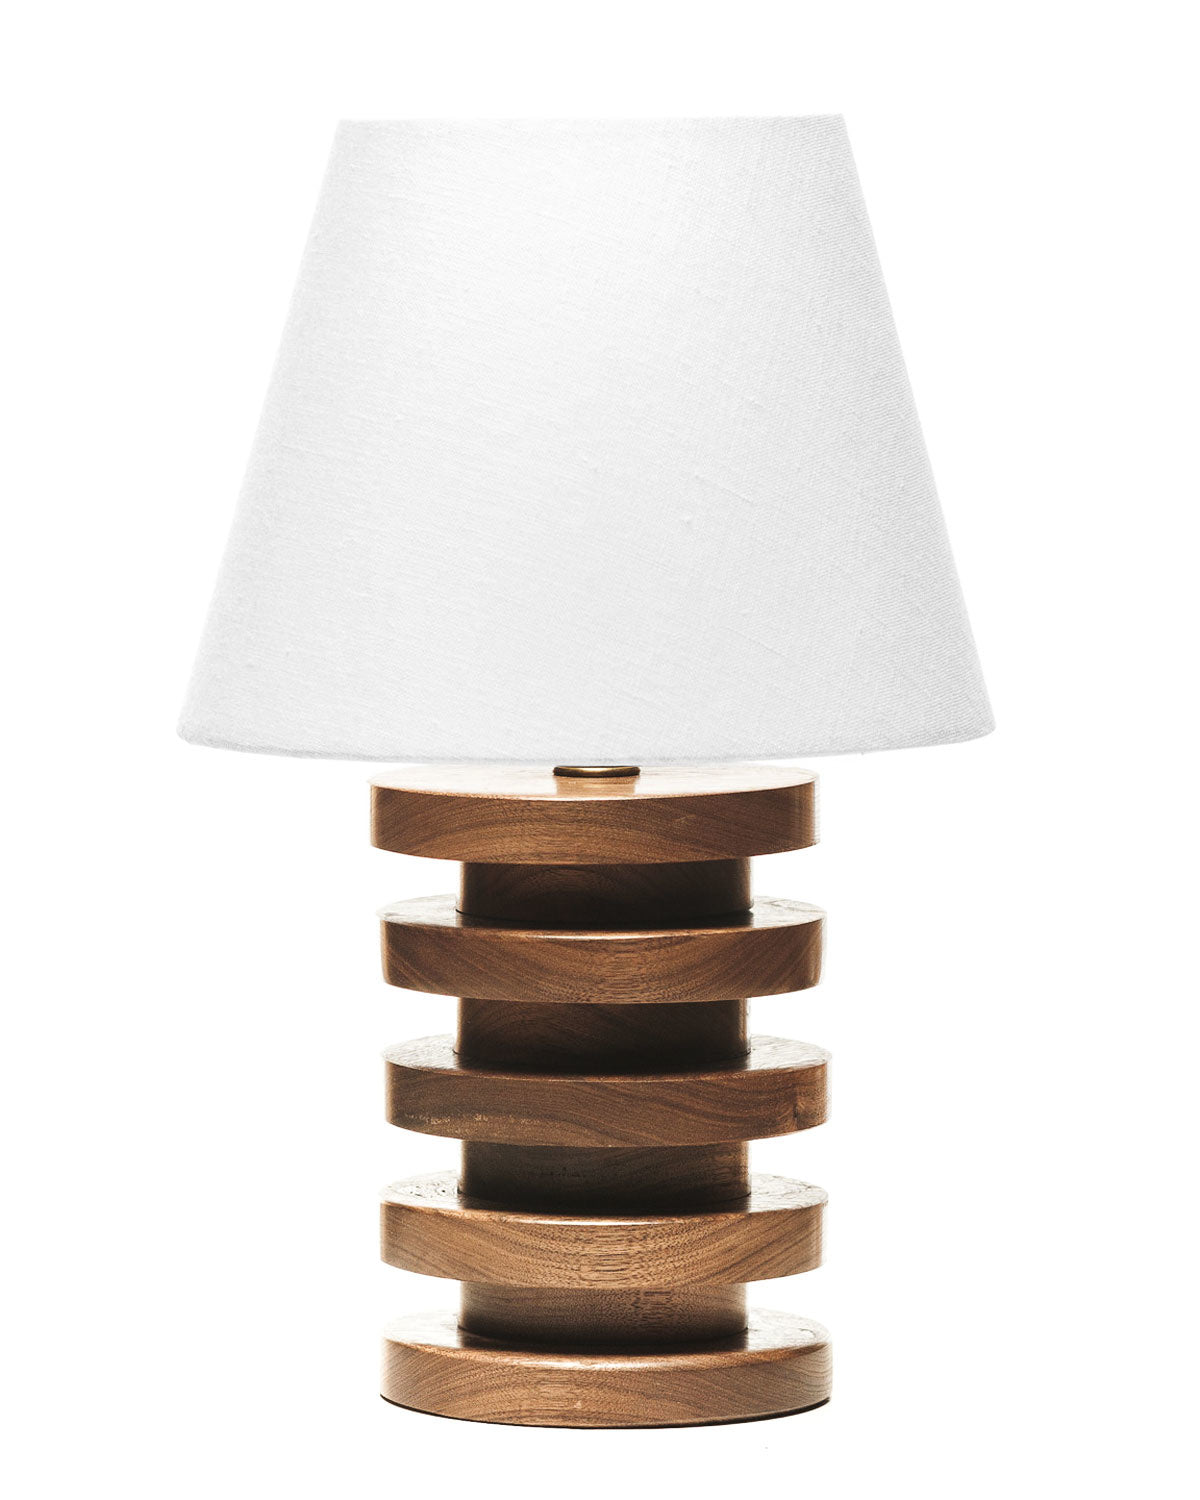 Malmo Model S Table Lamp